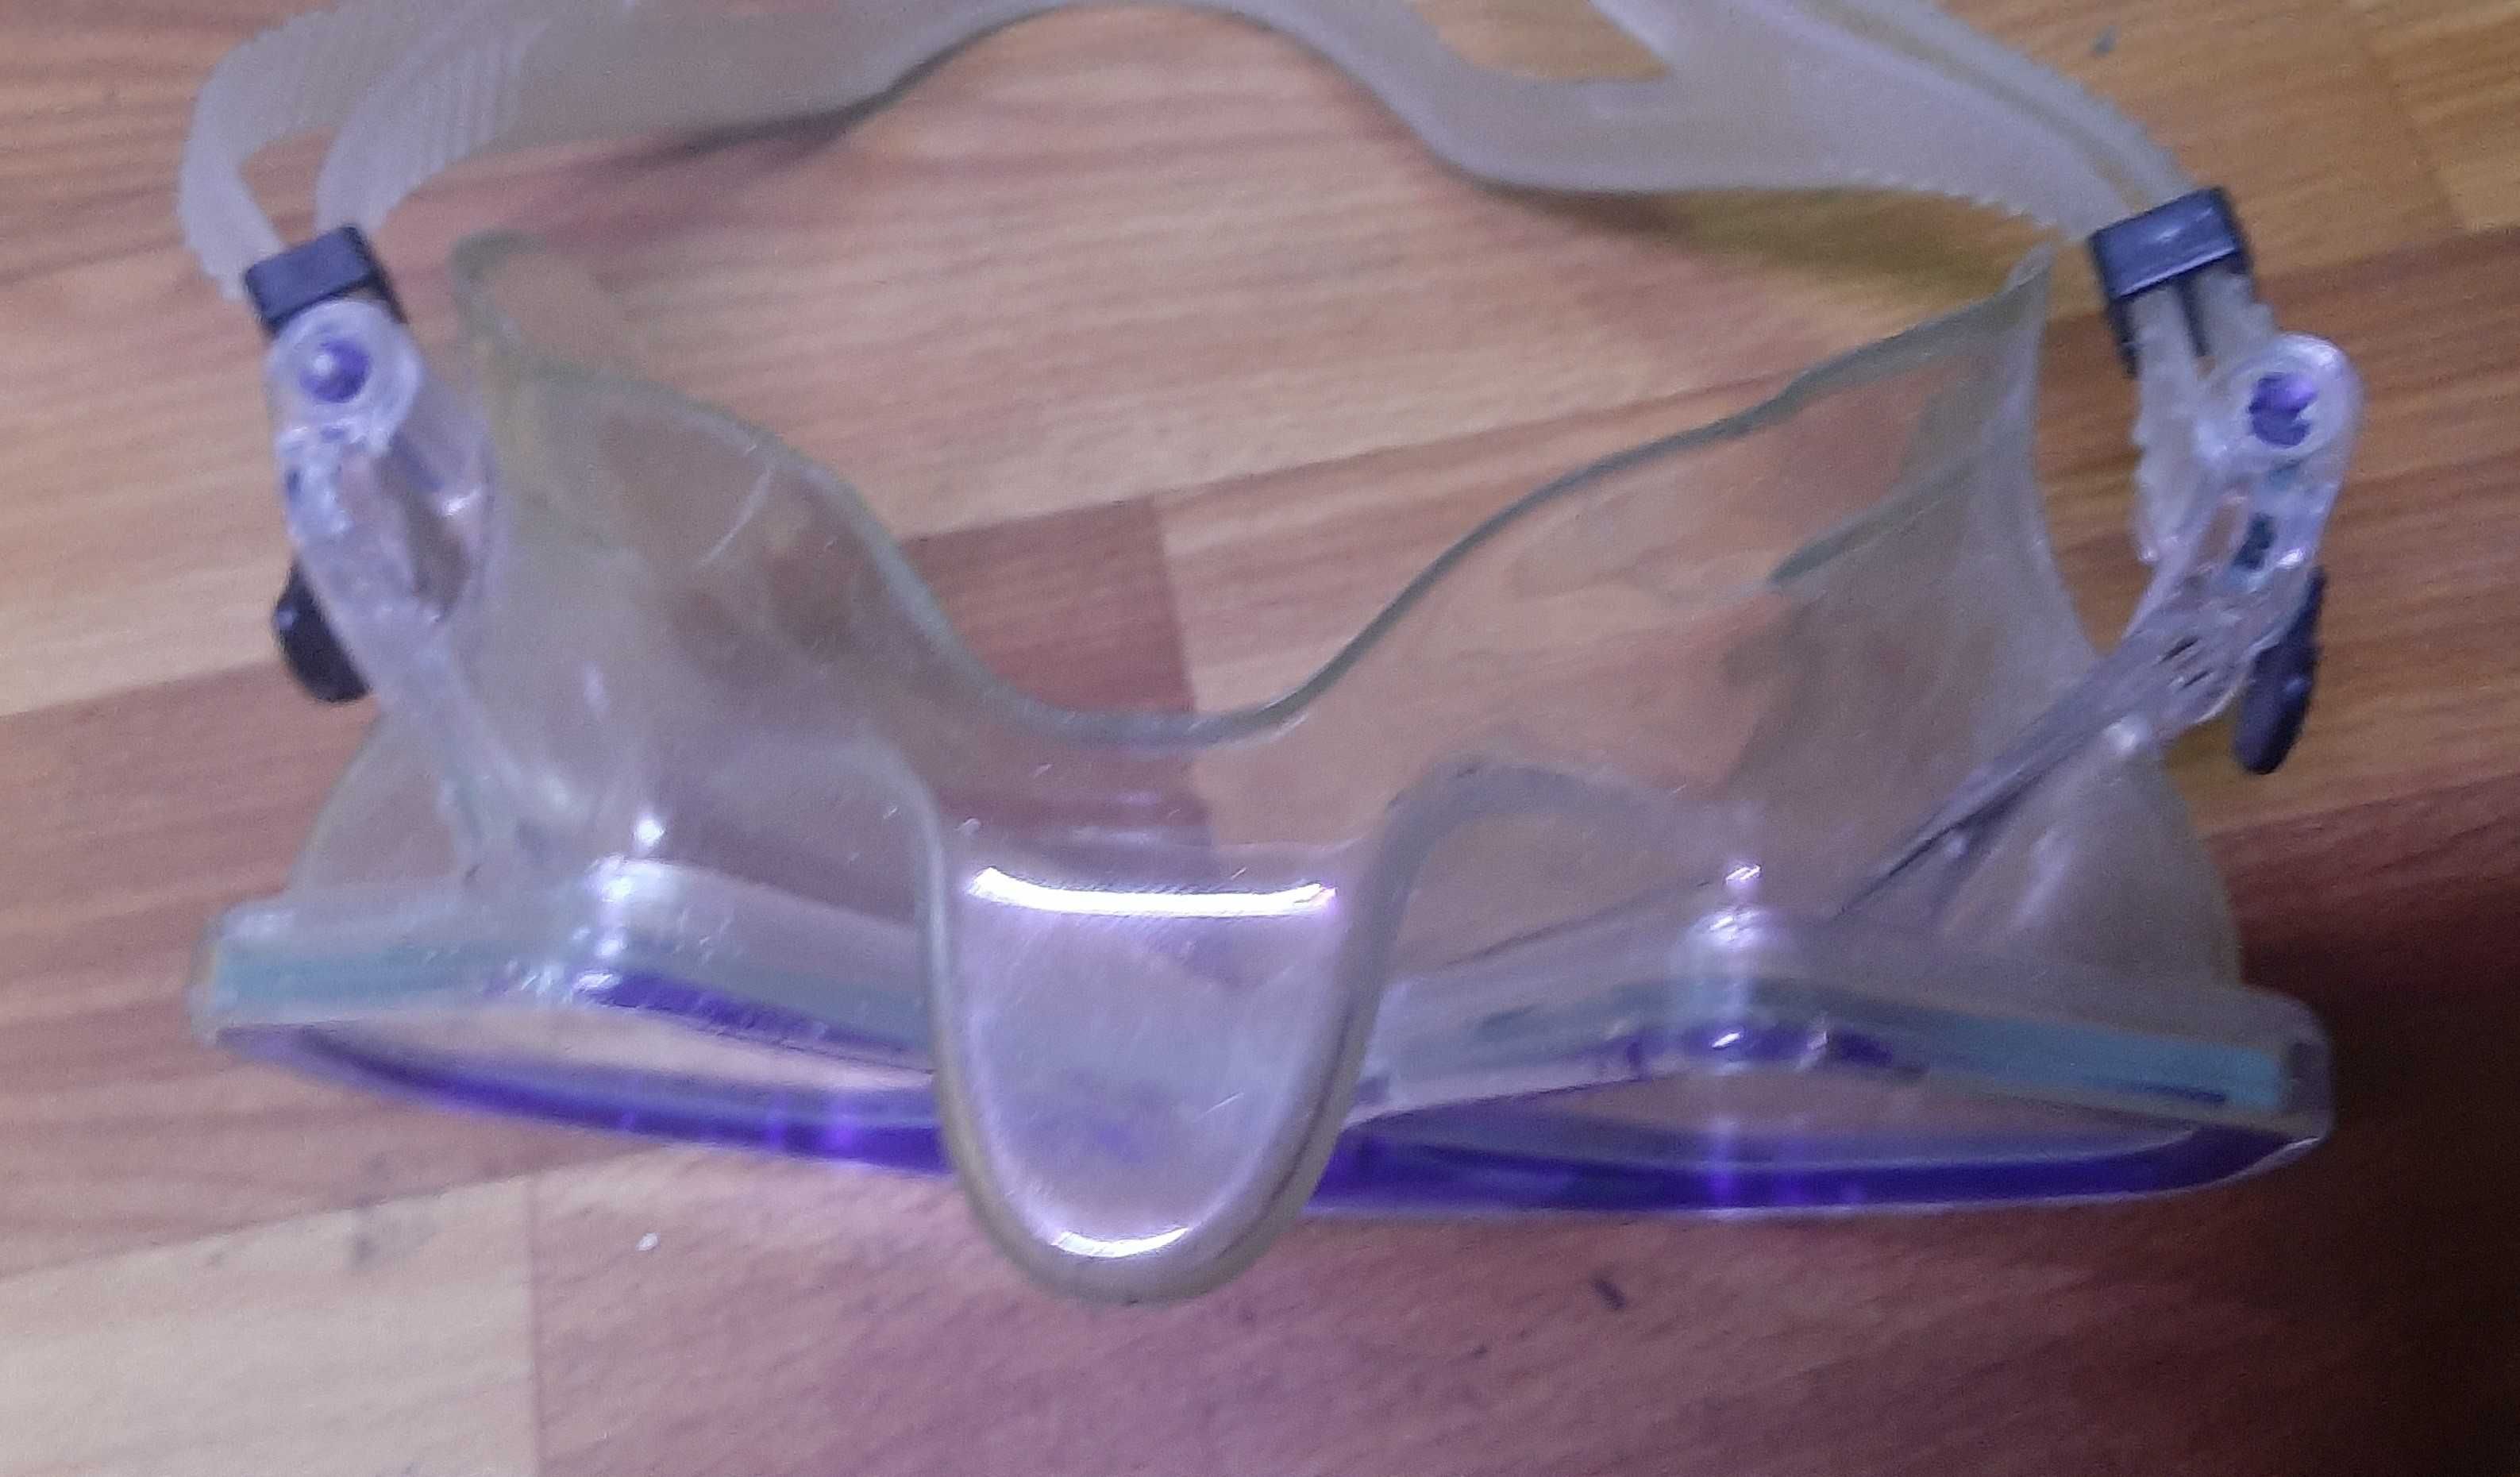 очки для плавания TEMPERED GLASS